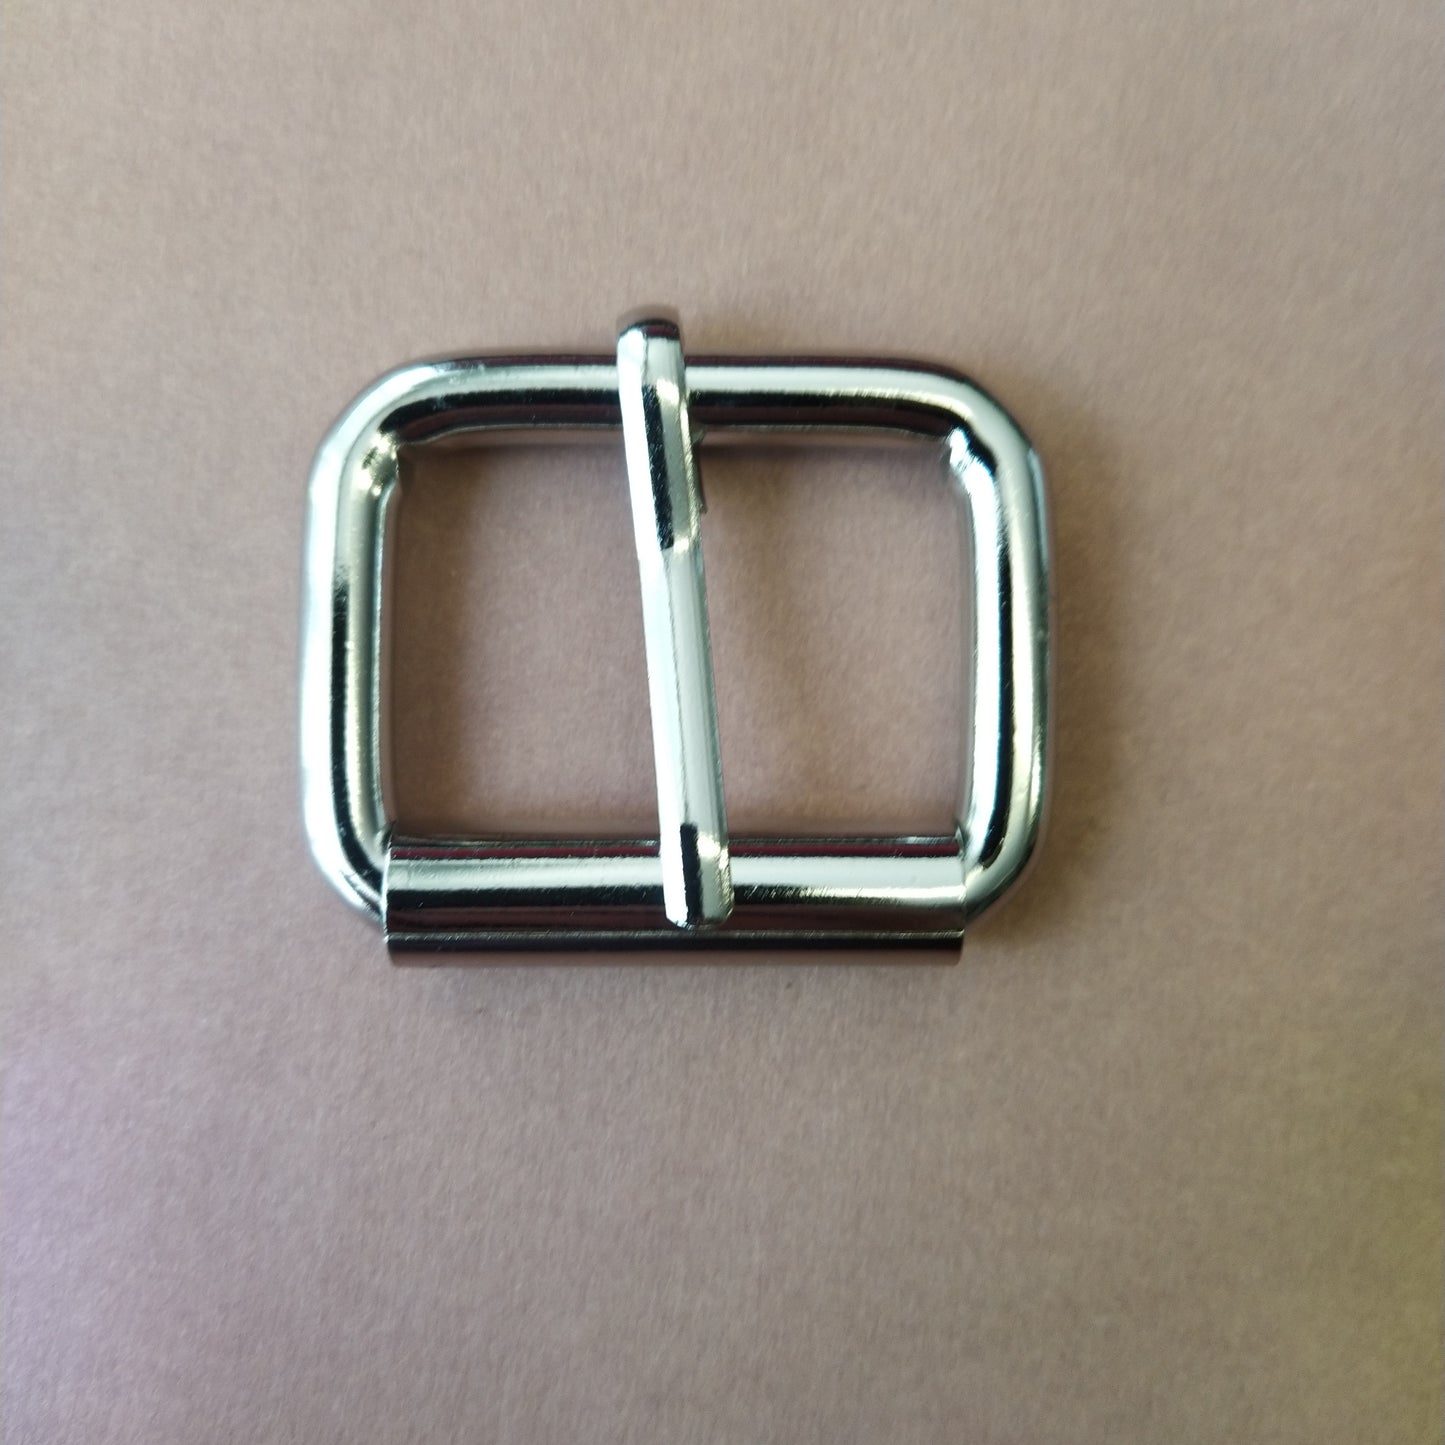 Belt buckle 3.3 x 2.4 cm